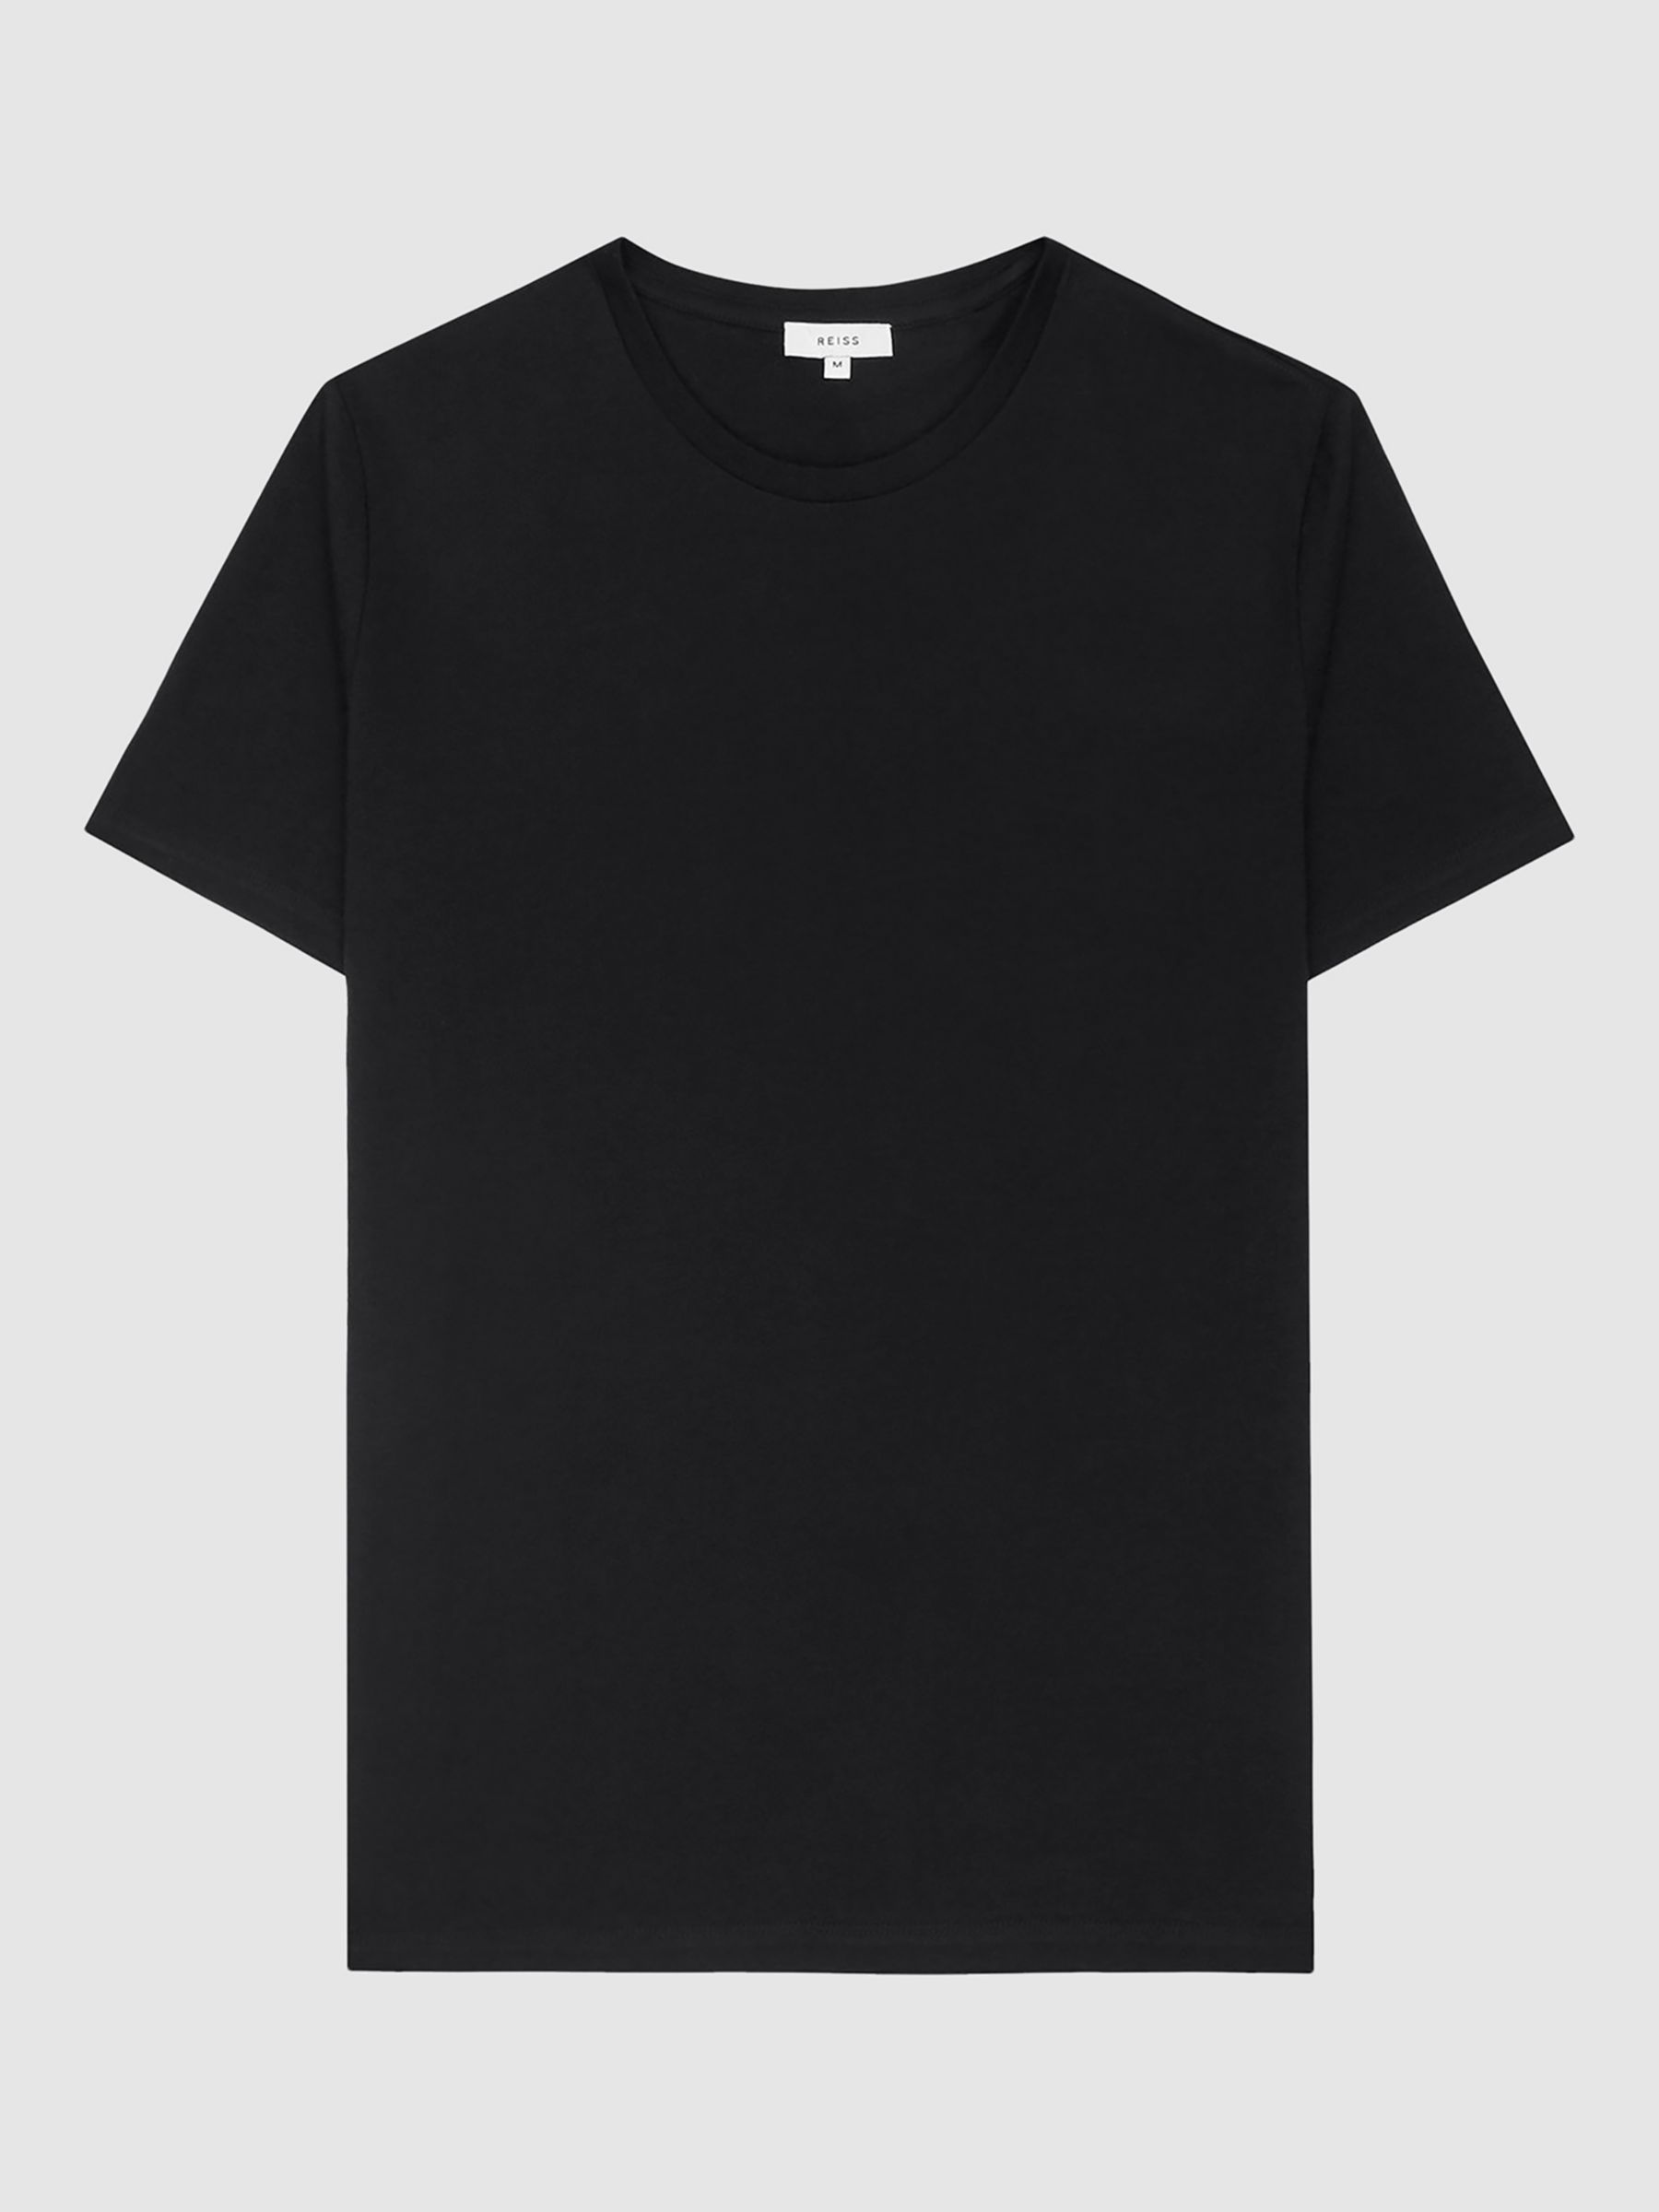 Reiss Bless Cotton Crew Neck T-Shirt, Black, XS